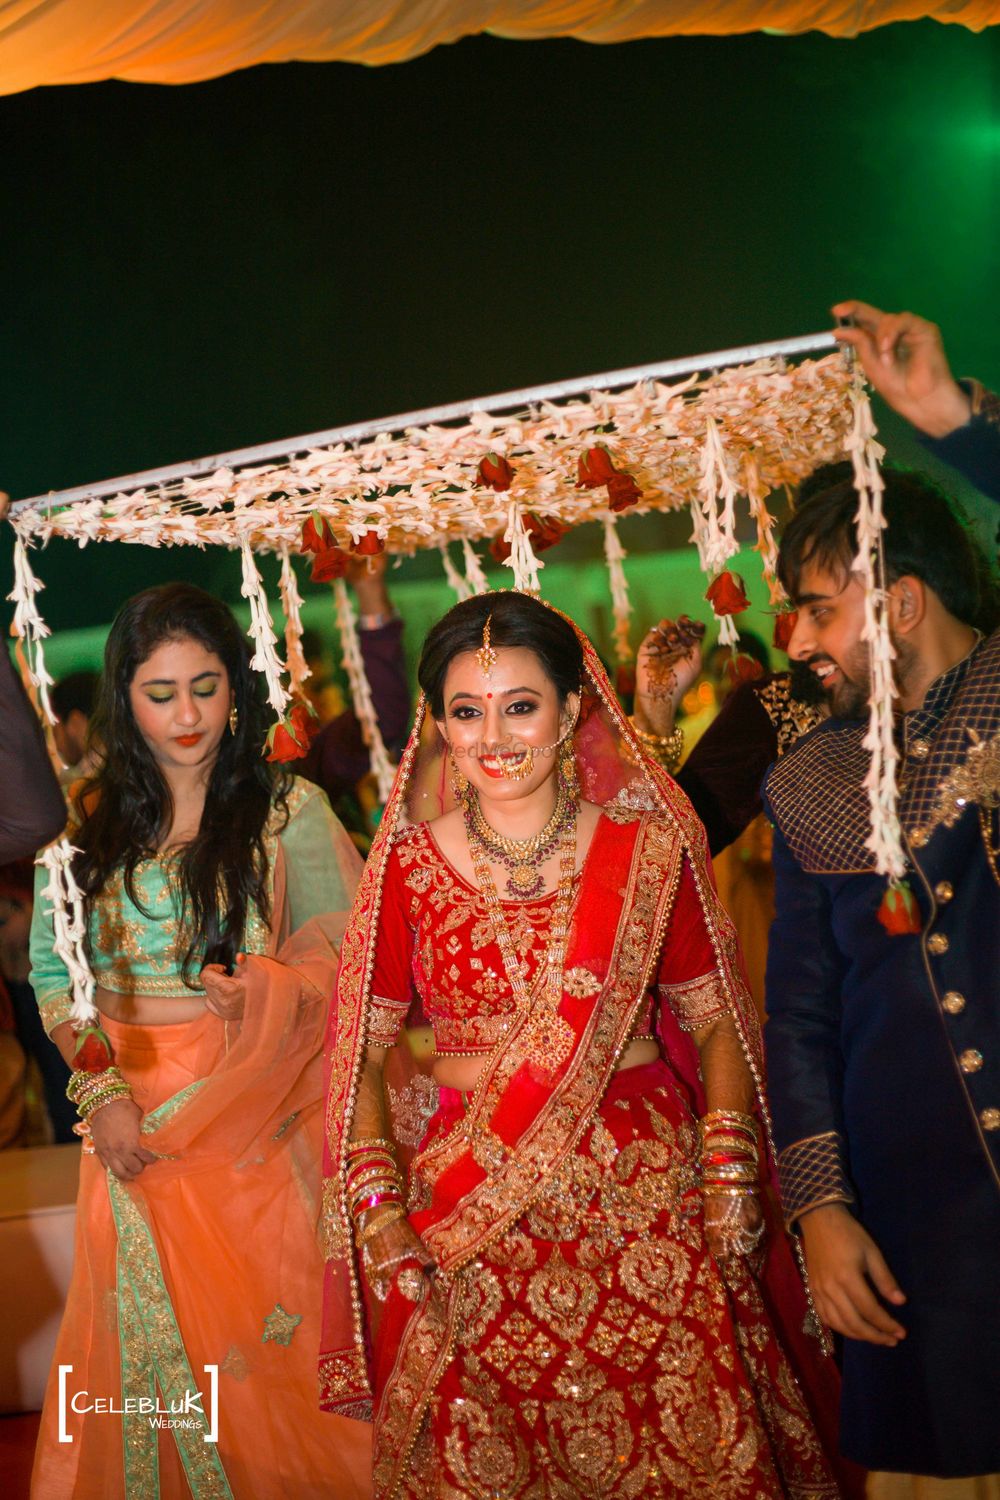 Photo From Priyanka & Anuj (Delhi) - By CelebLuk Weddings